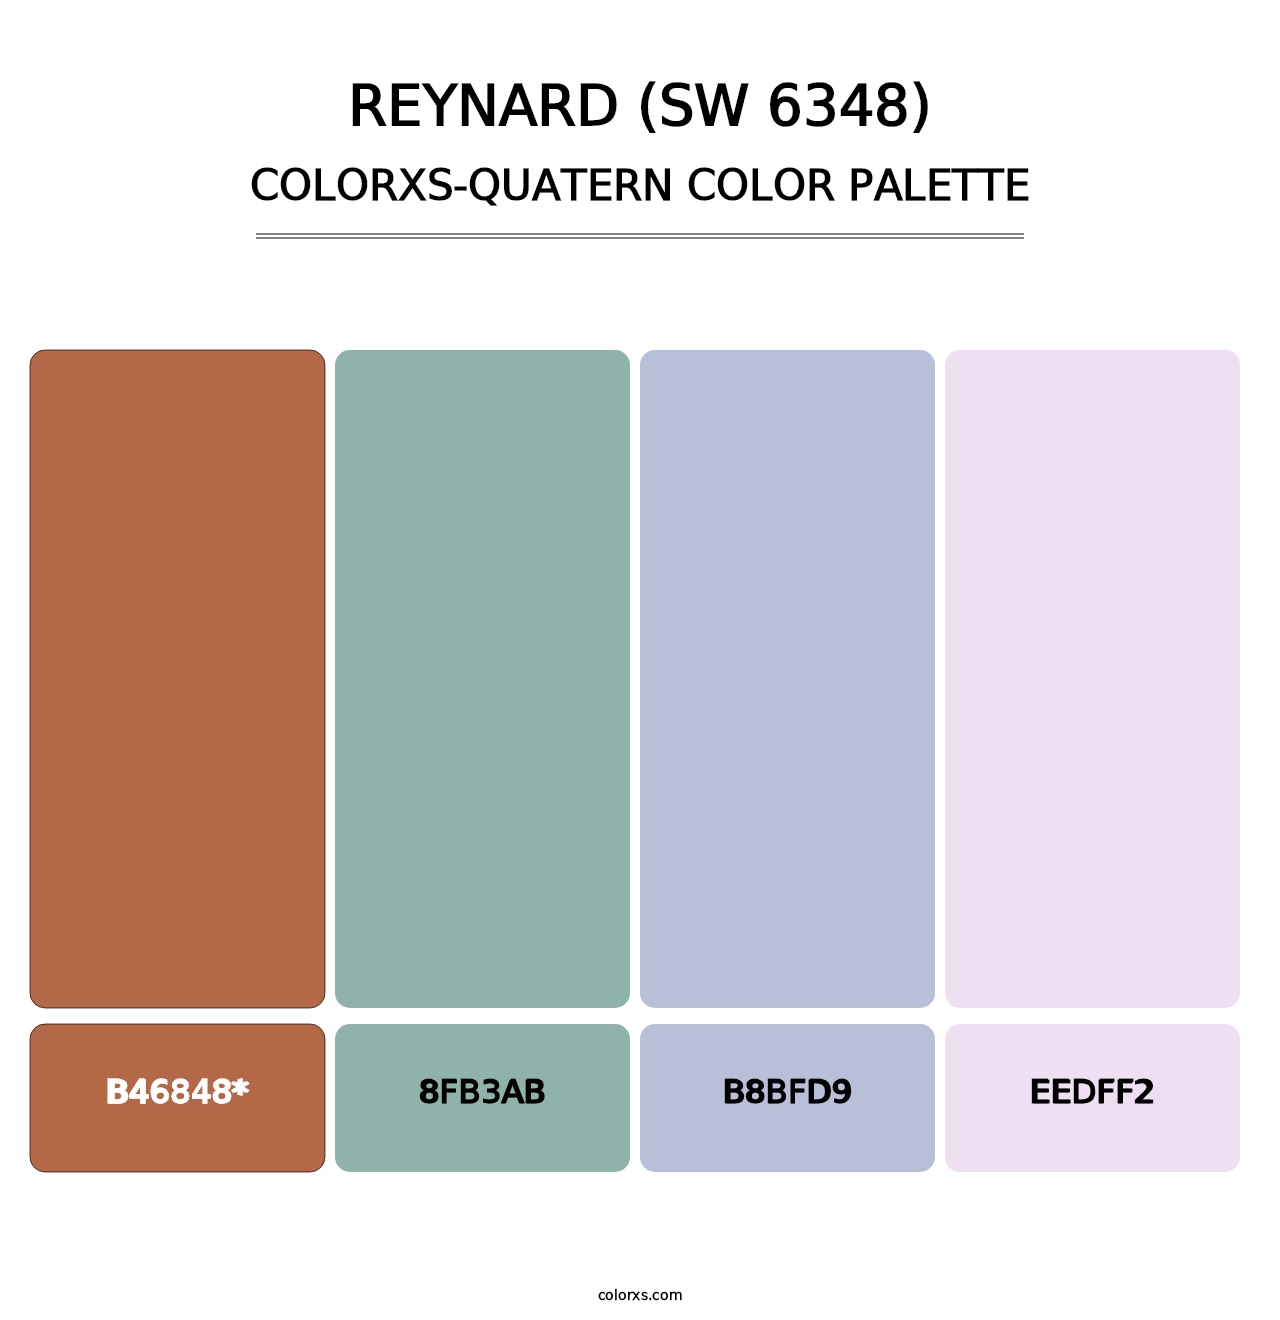 Reynard (SW 6348) - Colorxs Quatern Palette